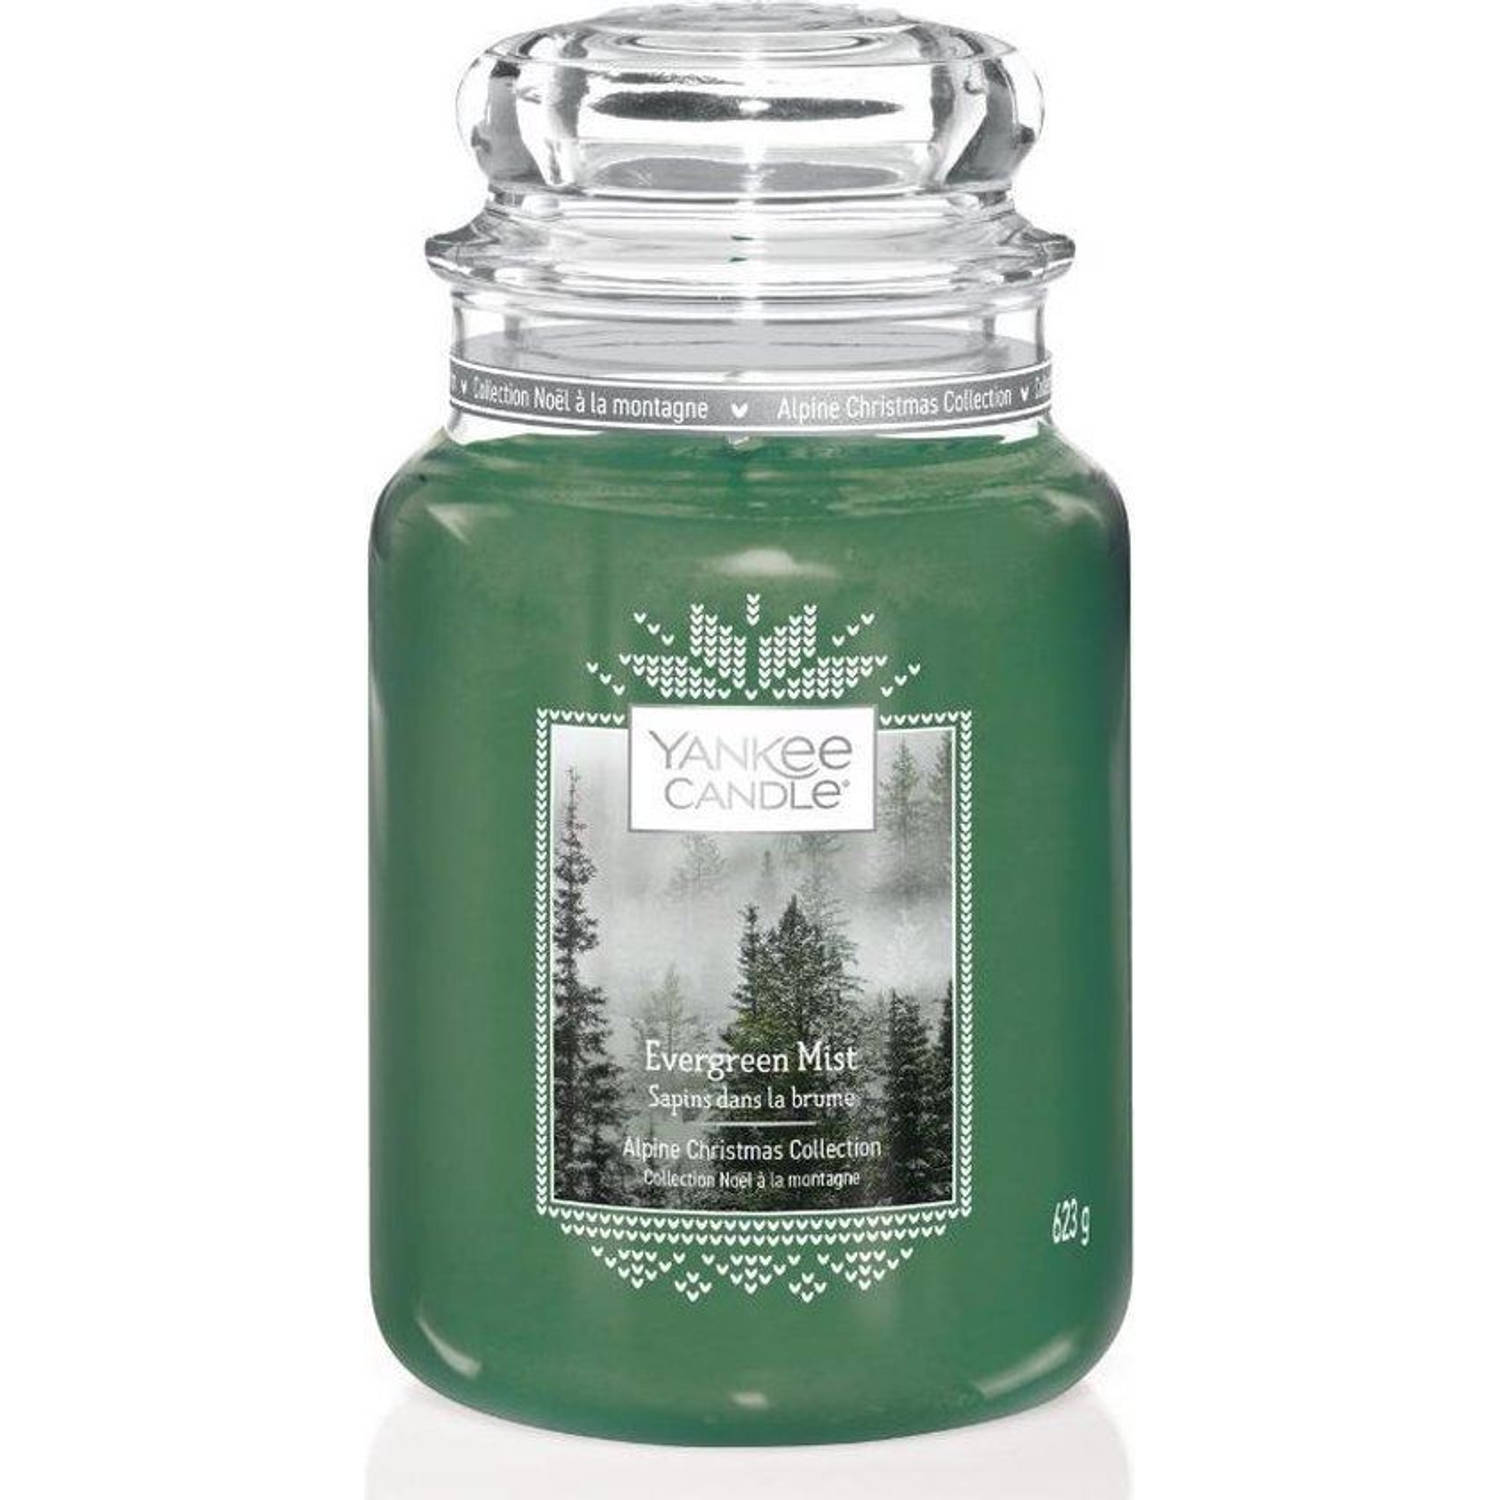 Yankee Candle - Evergreen Mist geurkaars - Large Jar - Tot 150 branduren